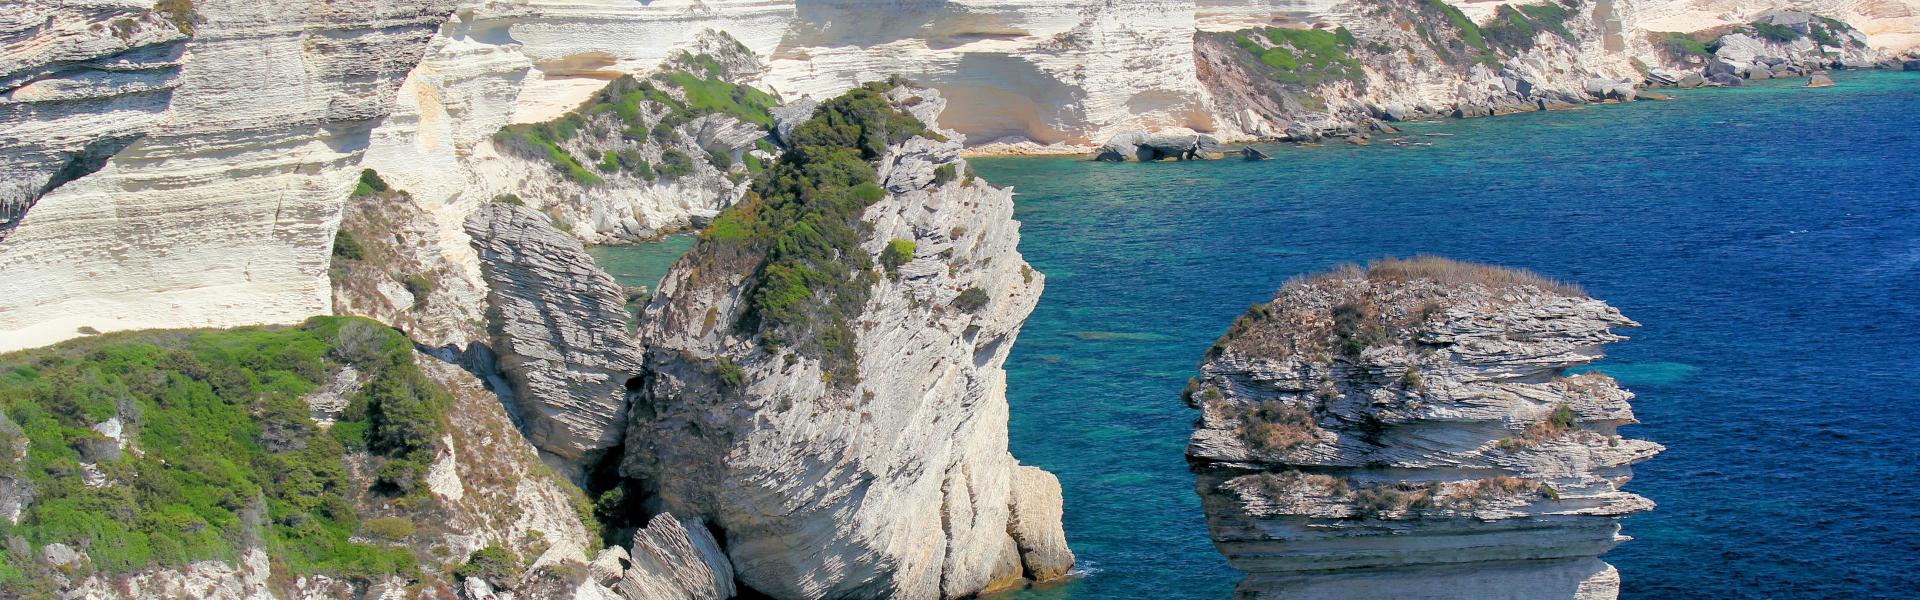 Location de vacances à Centuri - Haute-Corse - amivac